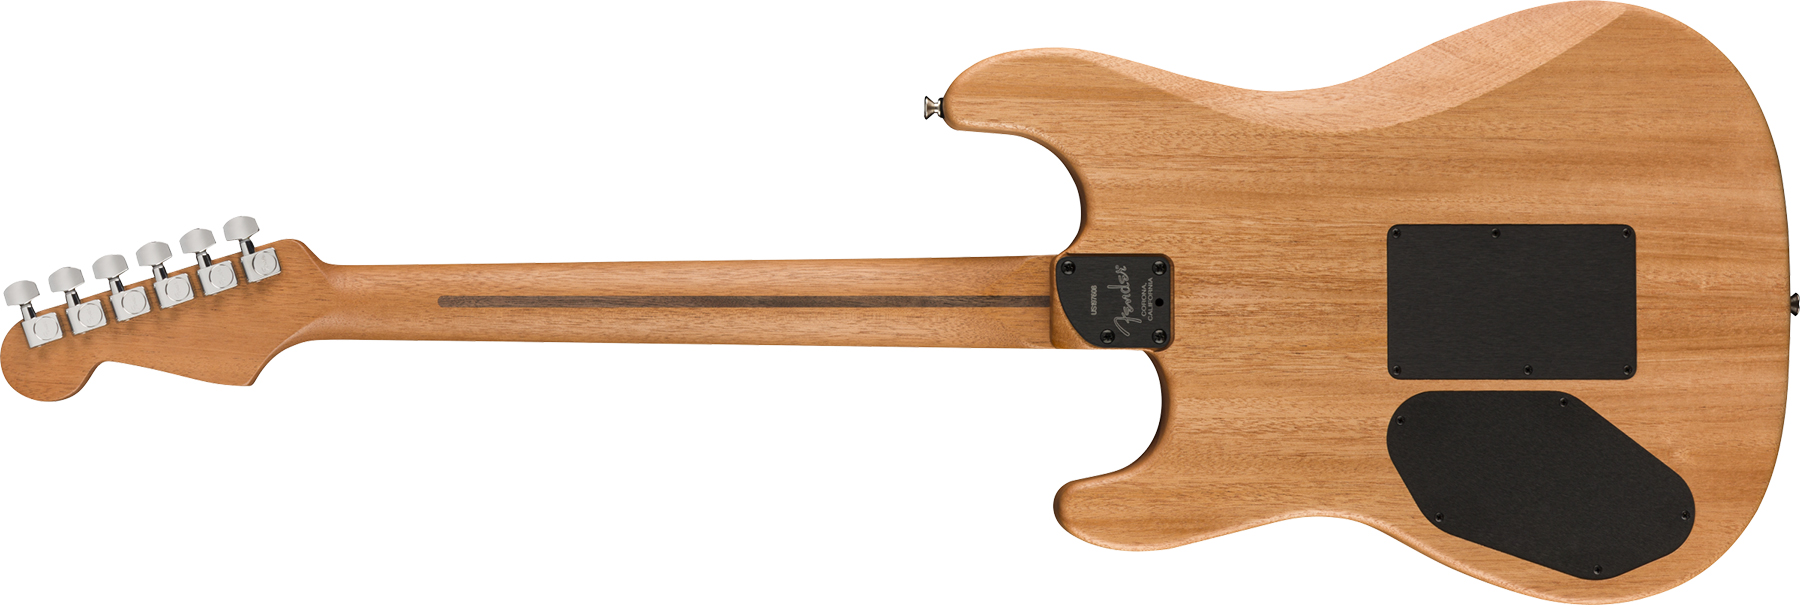 Fender American Acoustasonic Strat Usa Eb - 3-color Sunburst - Elektroakustische Gitarre - Variation 1